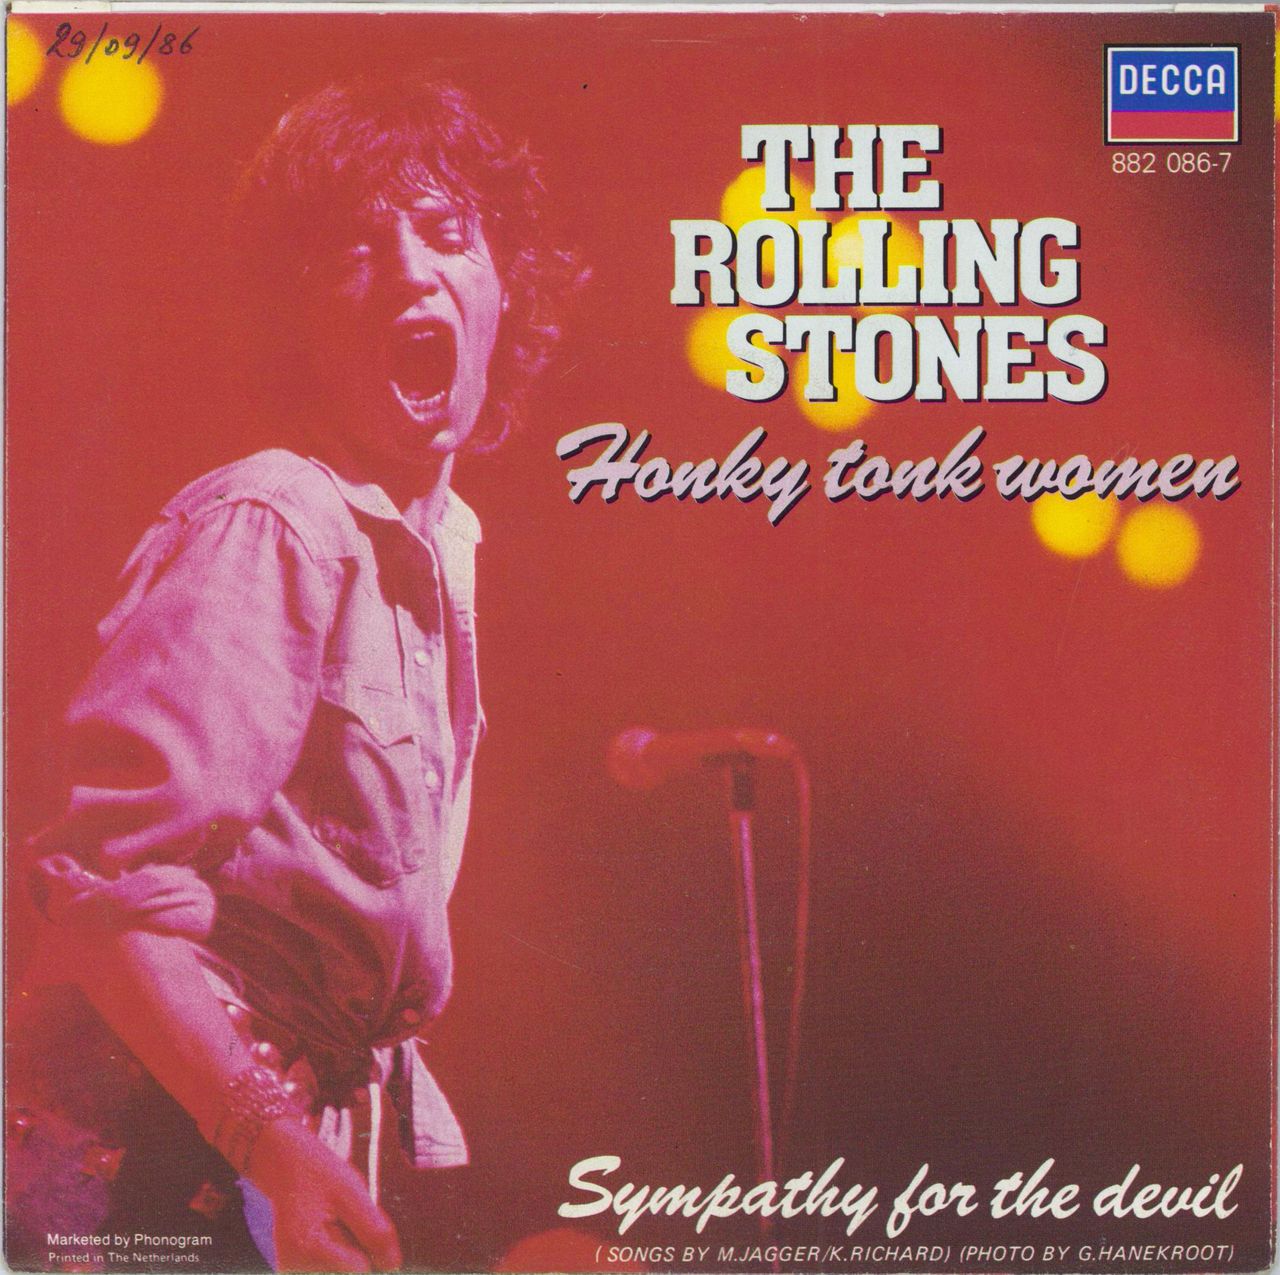 The Rolling Stones Honky Tonk Women Dutch 7